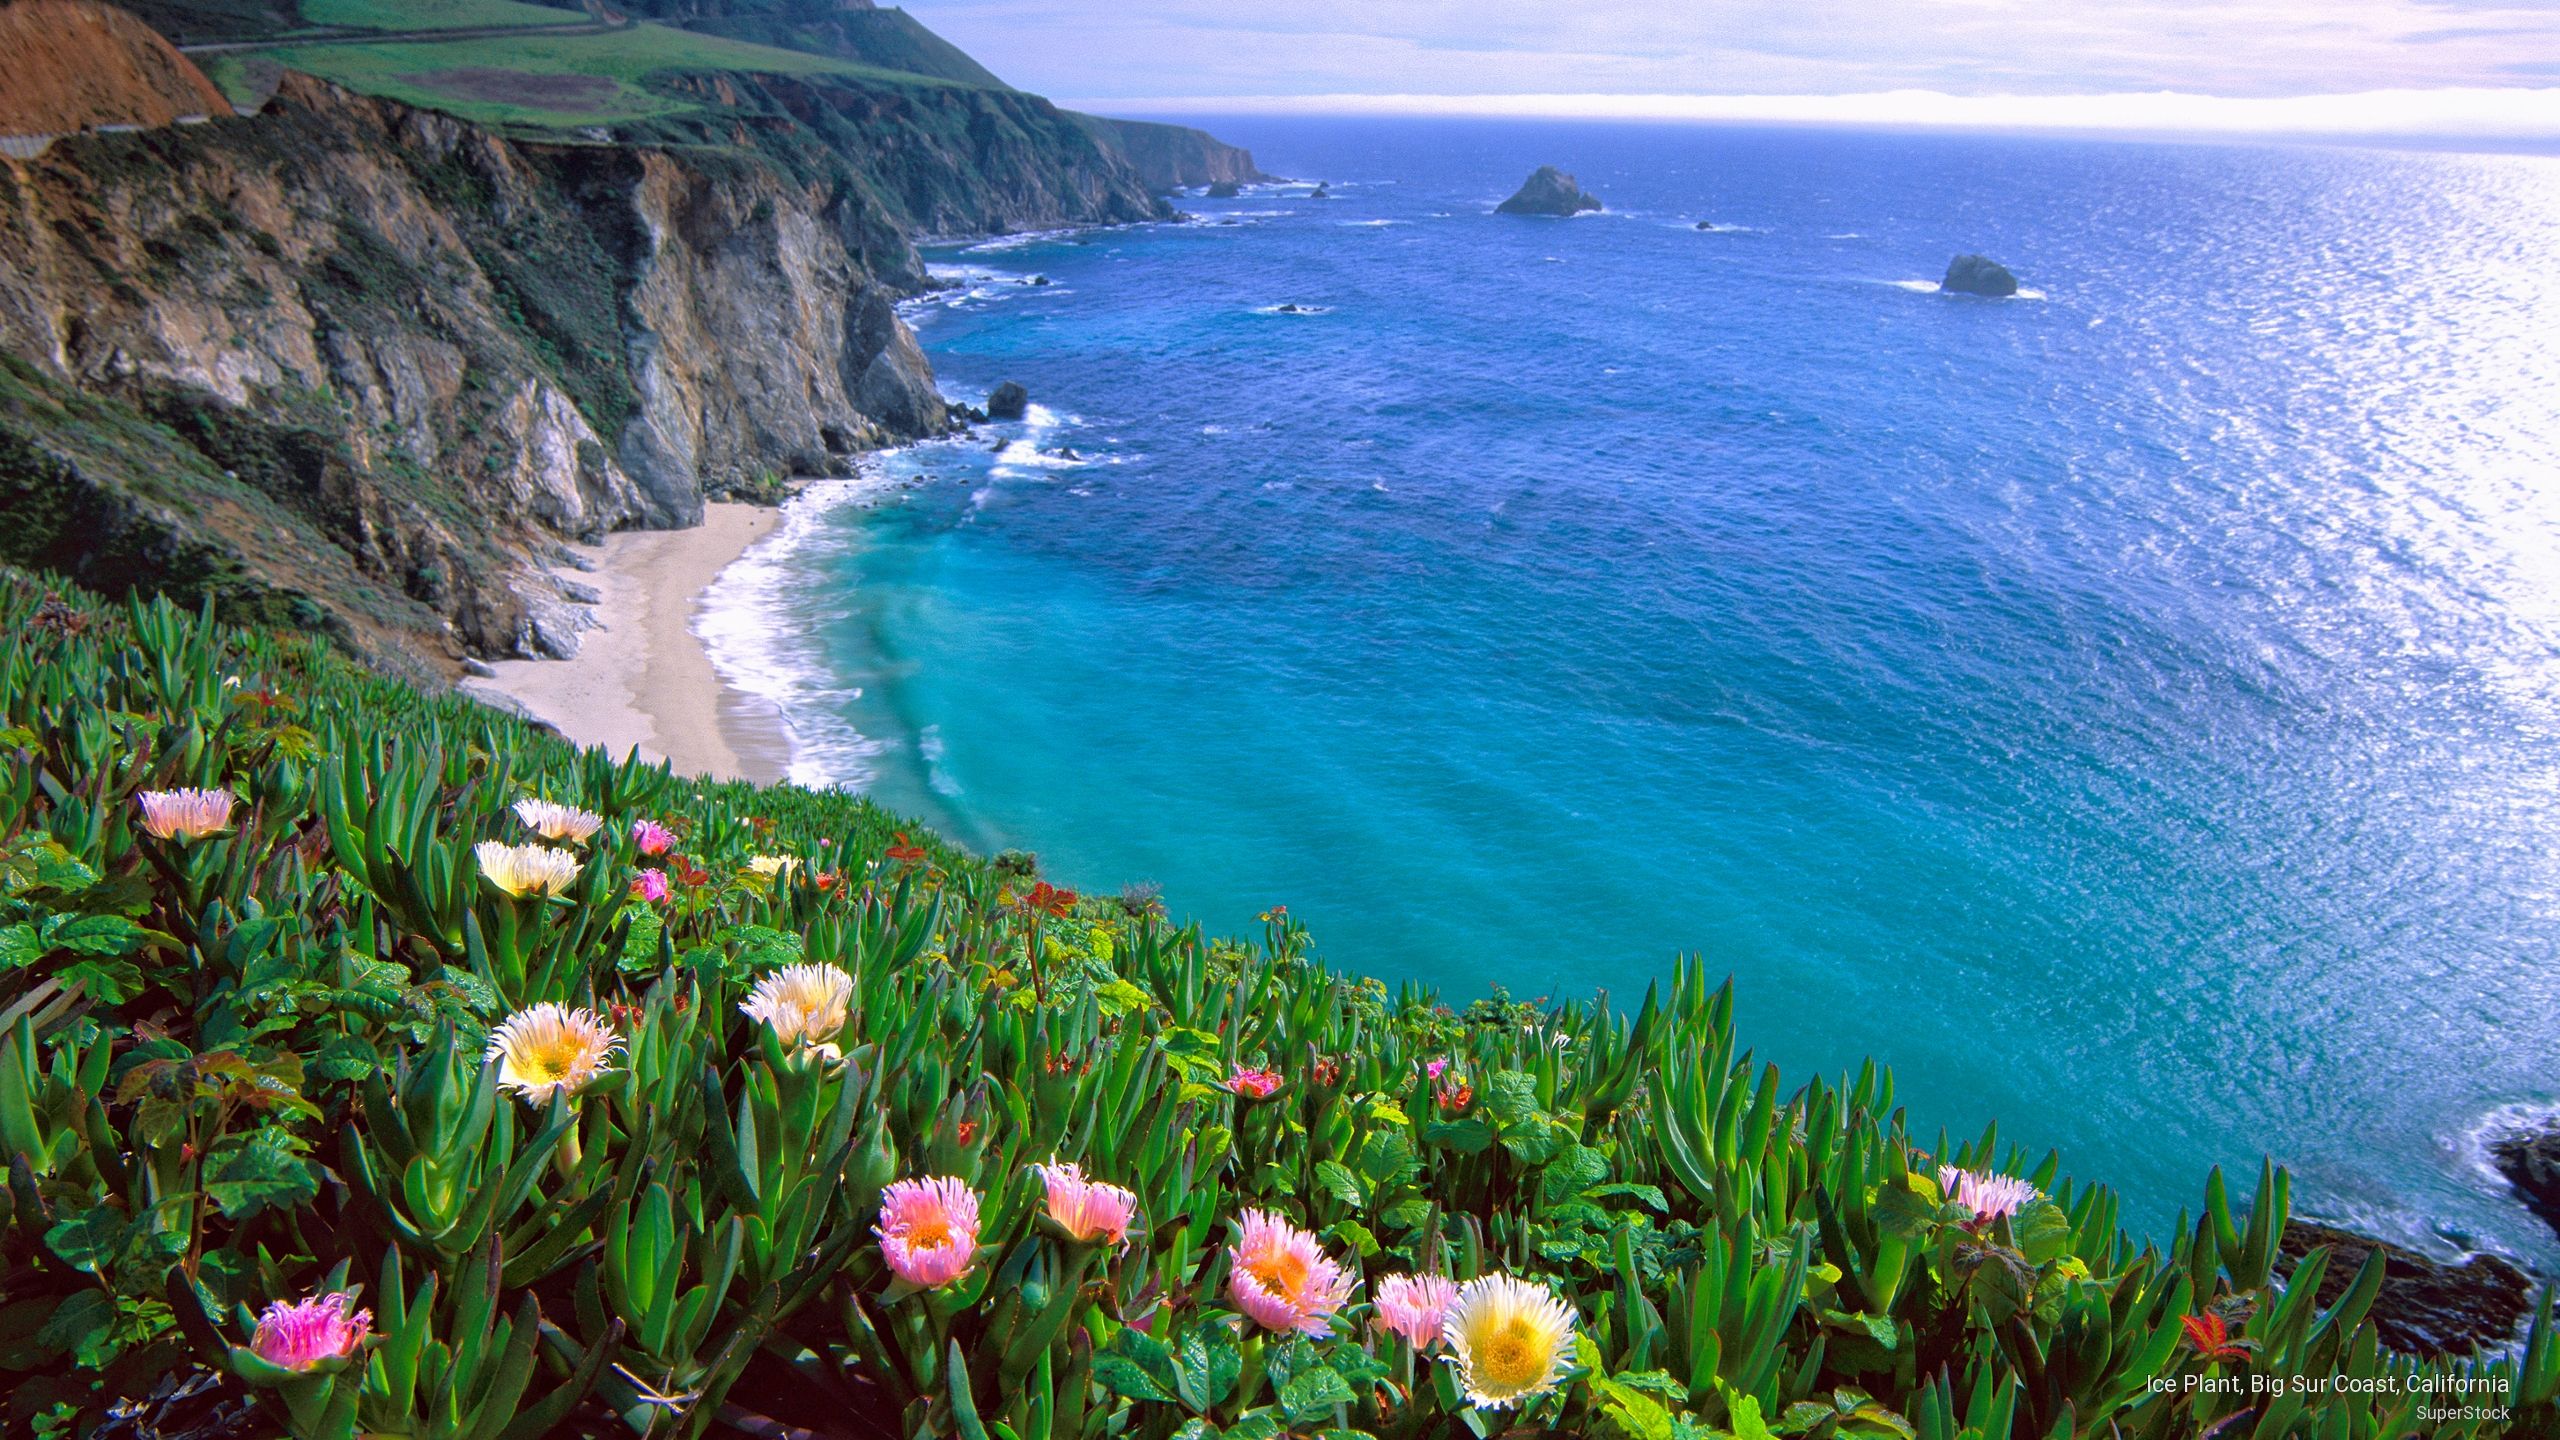 Flowers along the Coastline